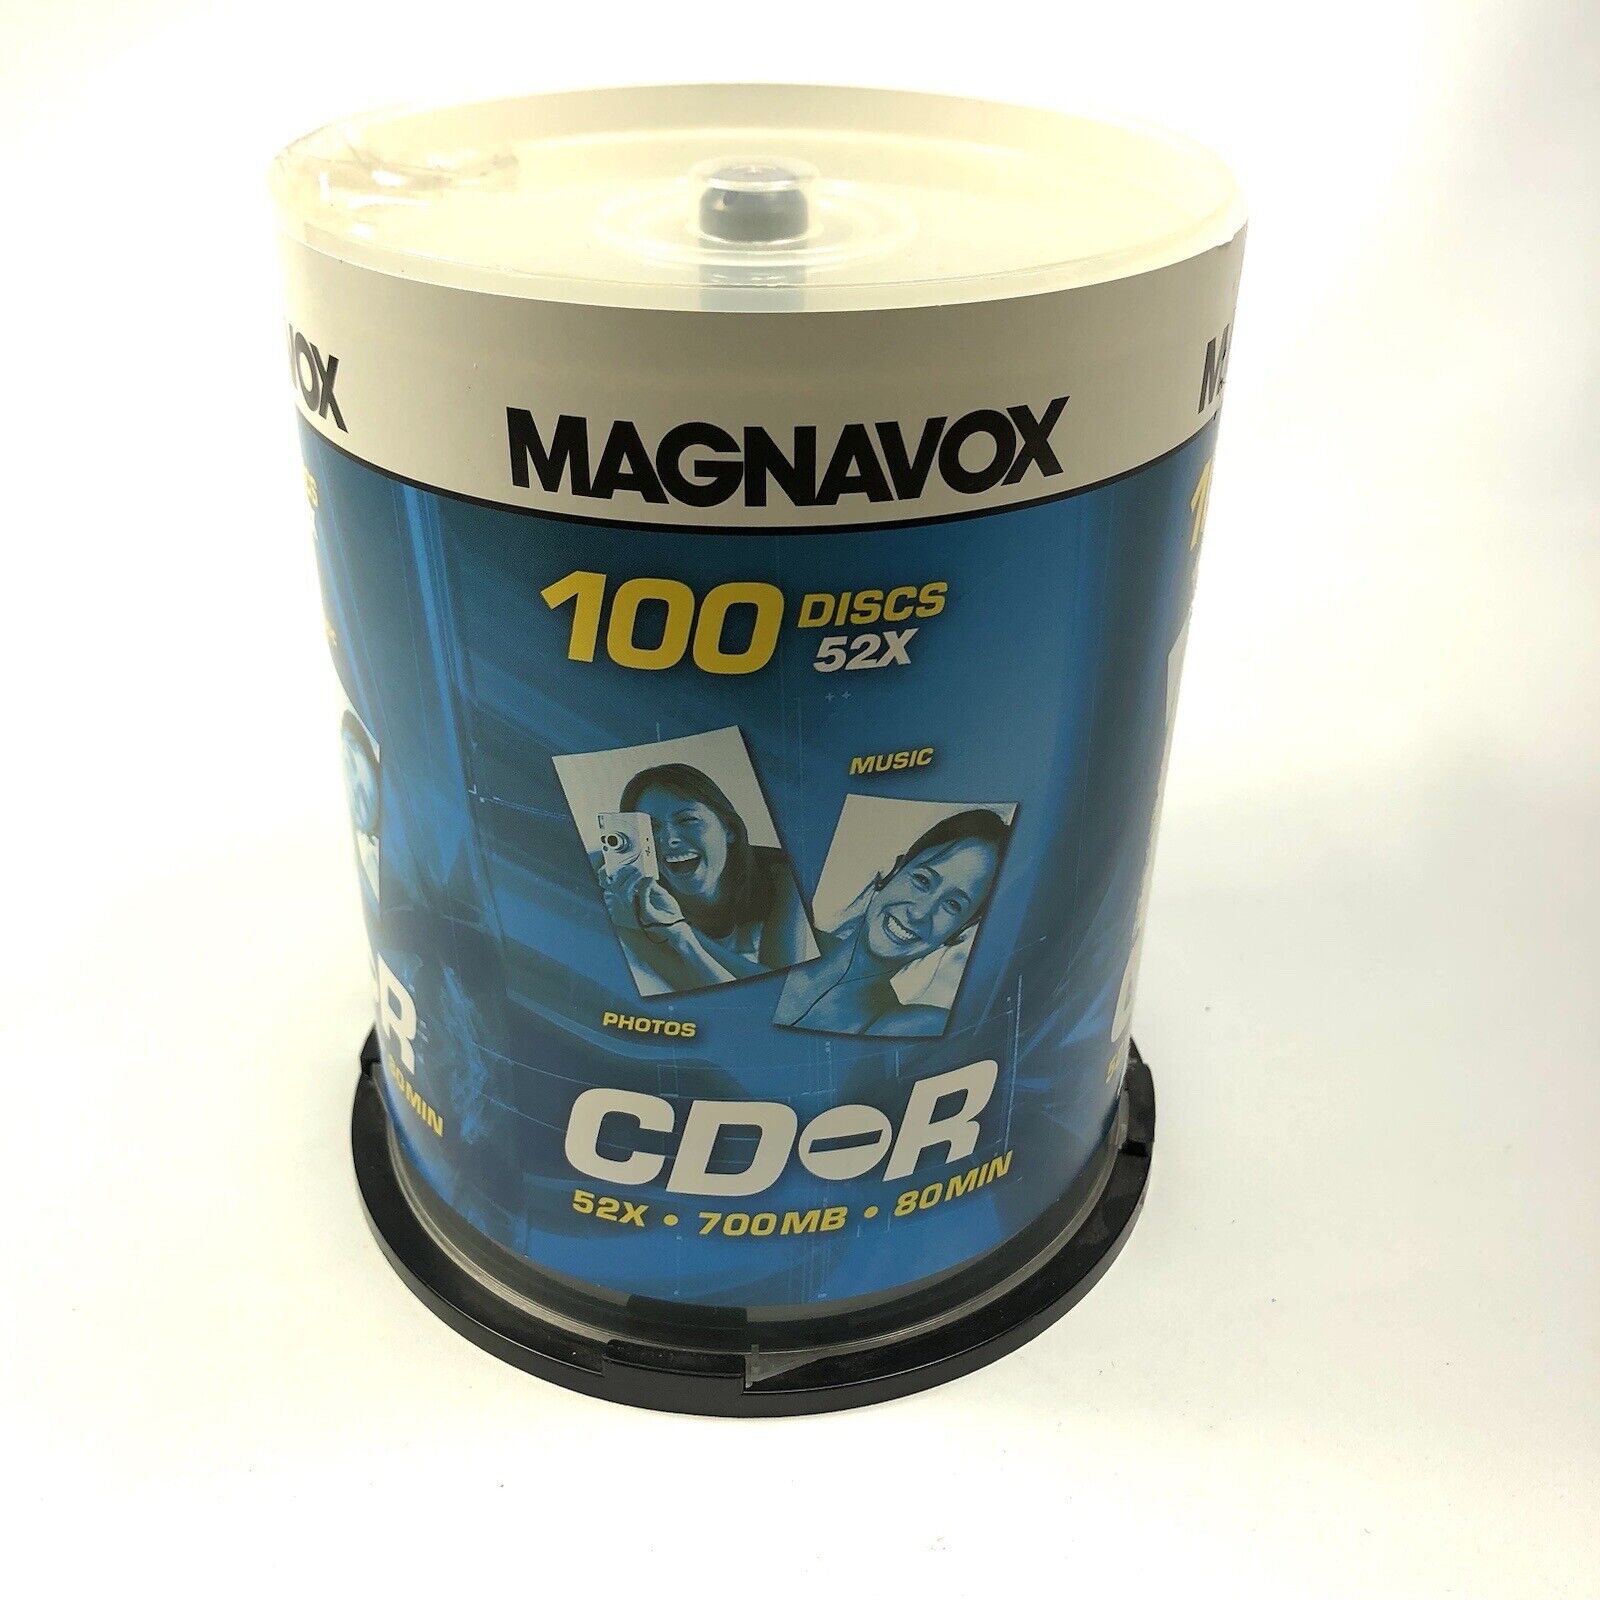 Magnavox 30 CD Discs CD-R (52X 700MB 80 Min)